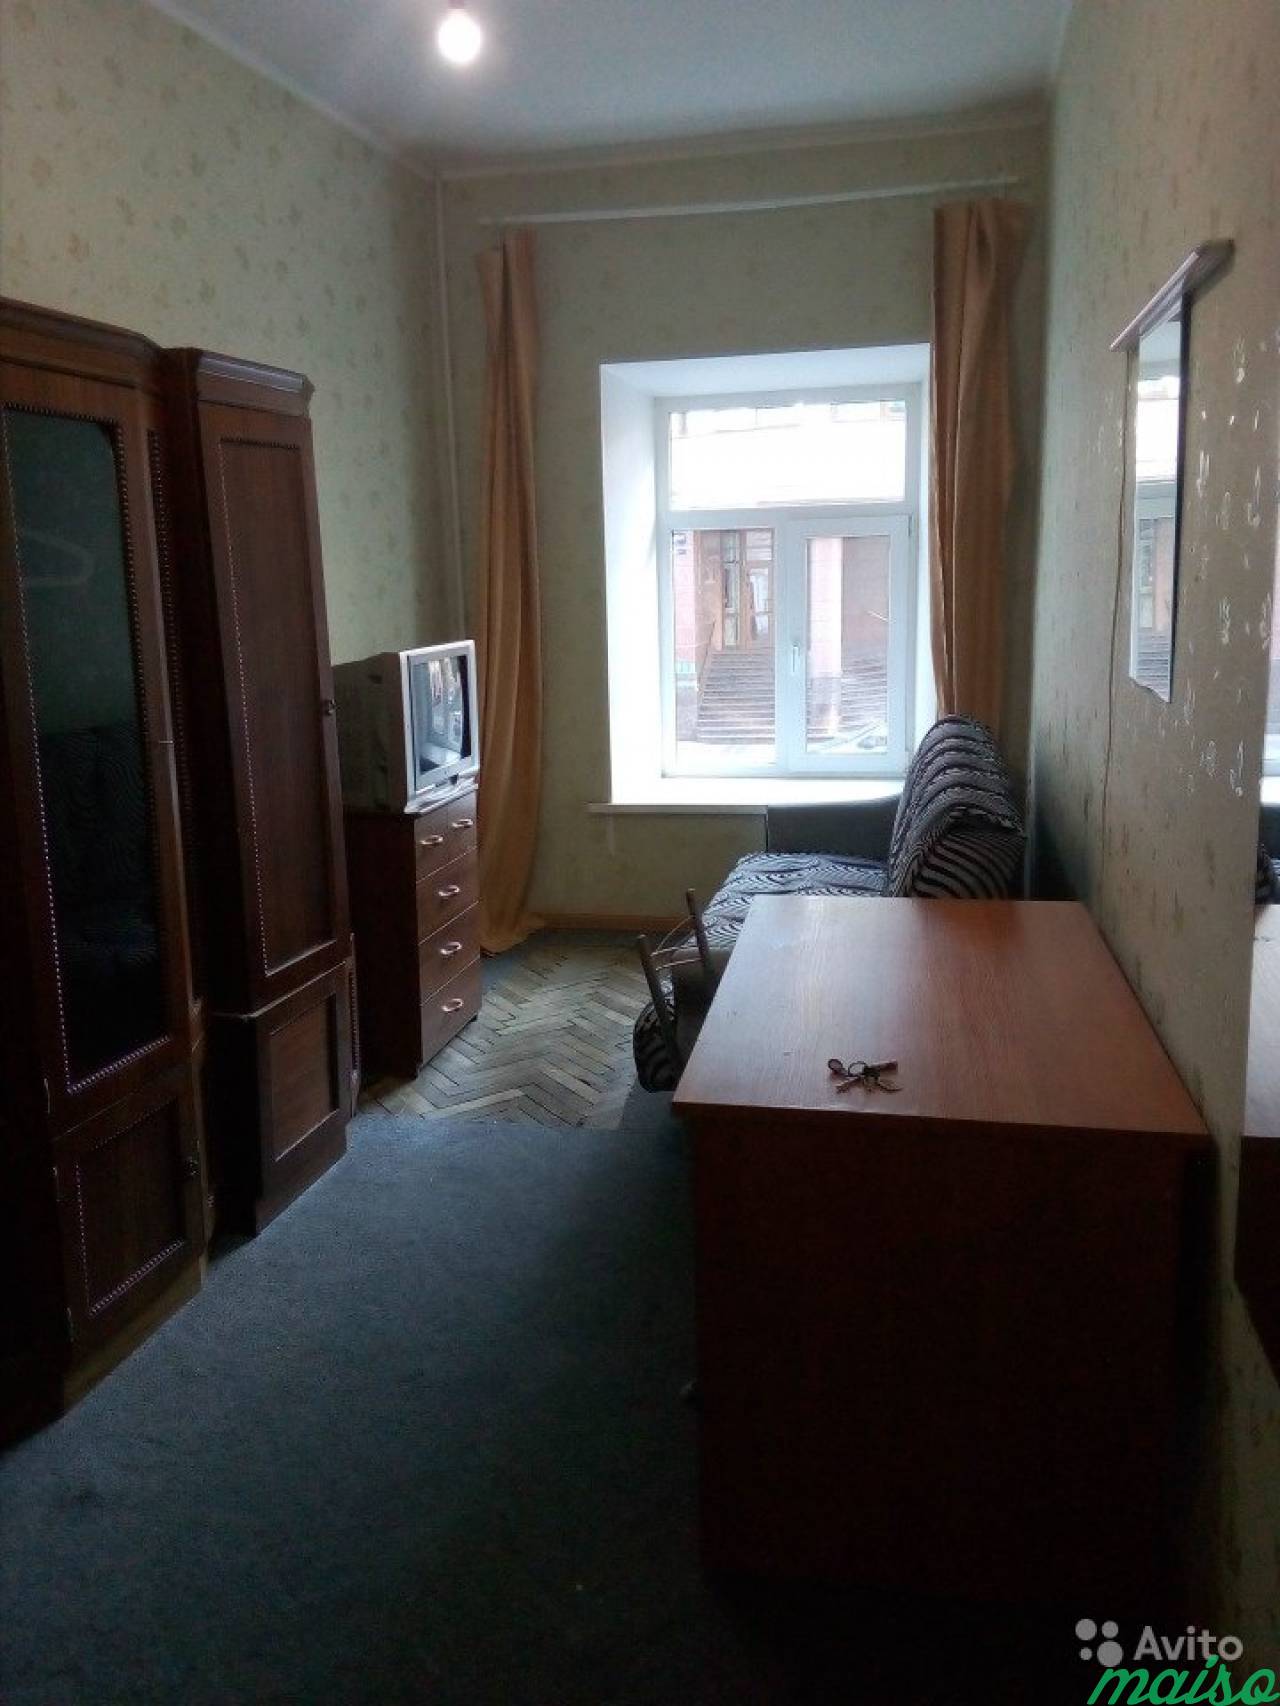 Комната 16 м² в 3-к, 2/4 эт. в Санкт-Петербурге. Фото 1